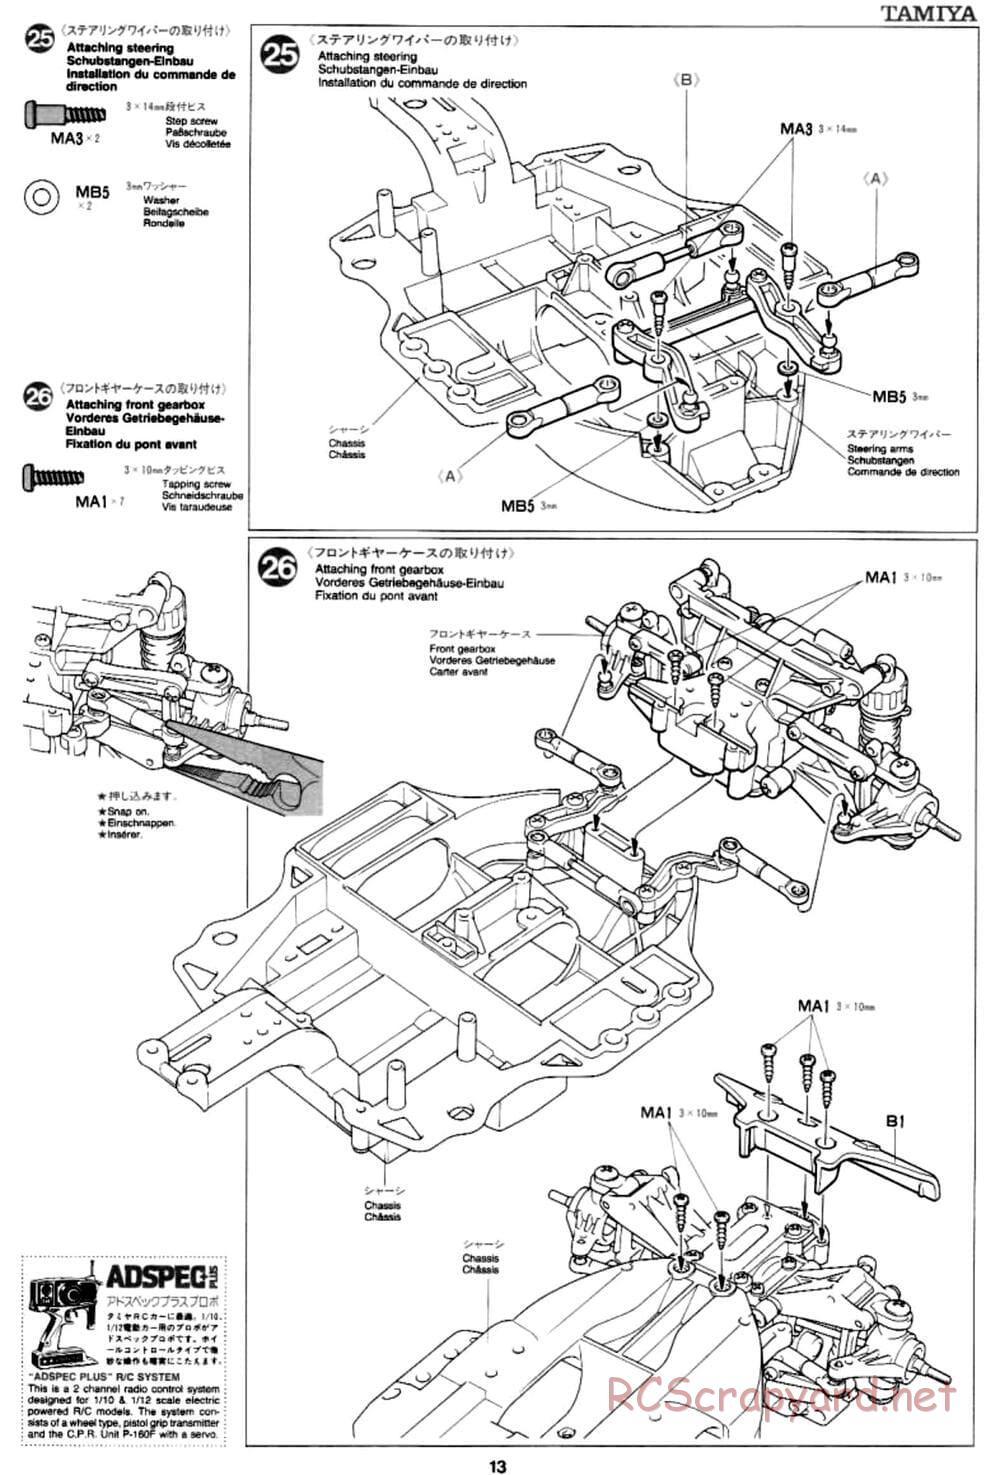 Tamiya - Mercedes CLK-GTR - TA-03R Chassis - Manual - Page 13